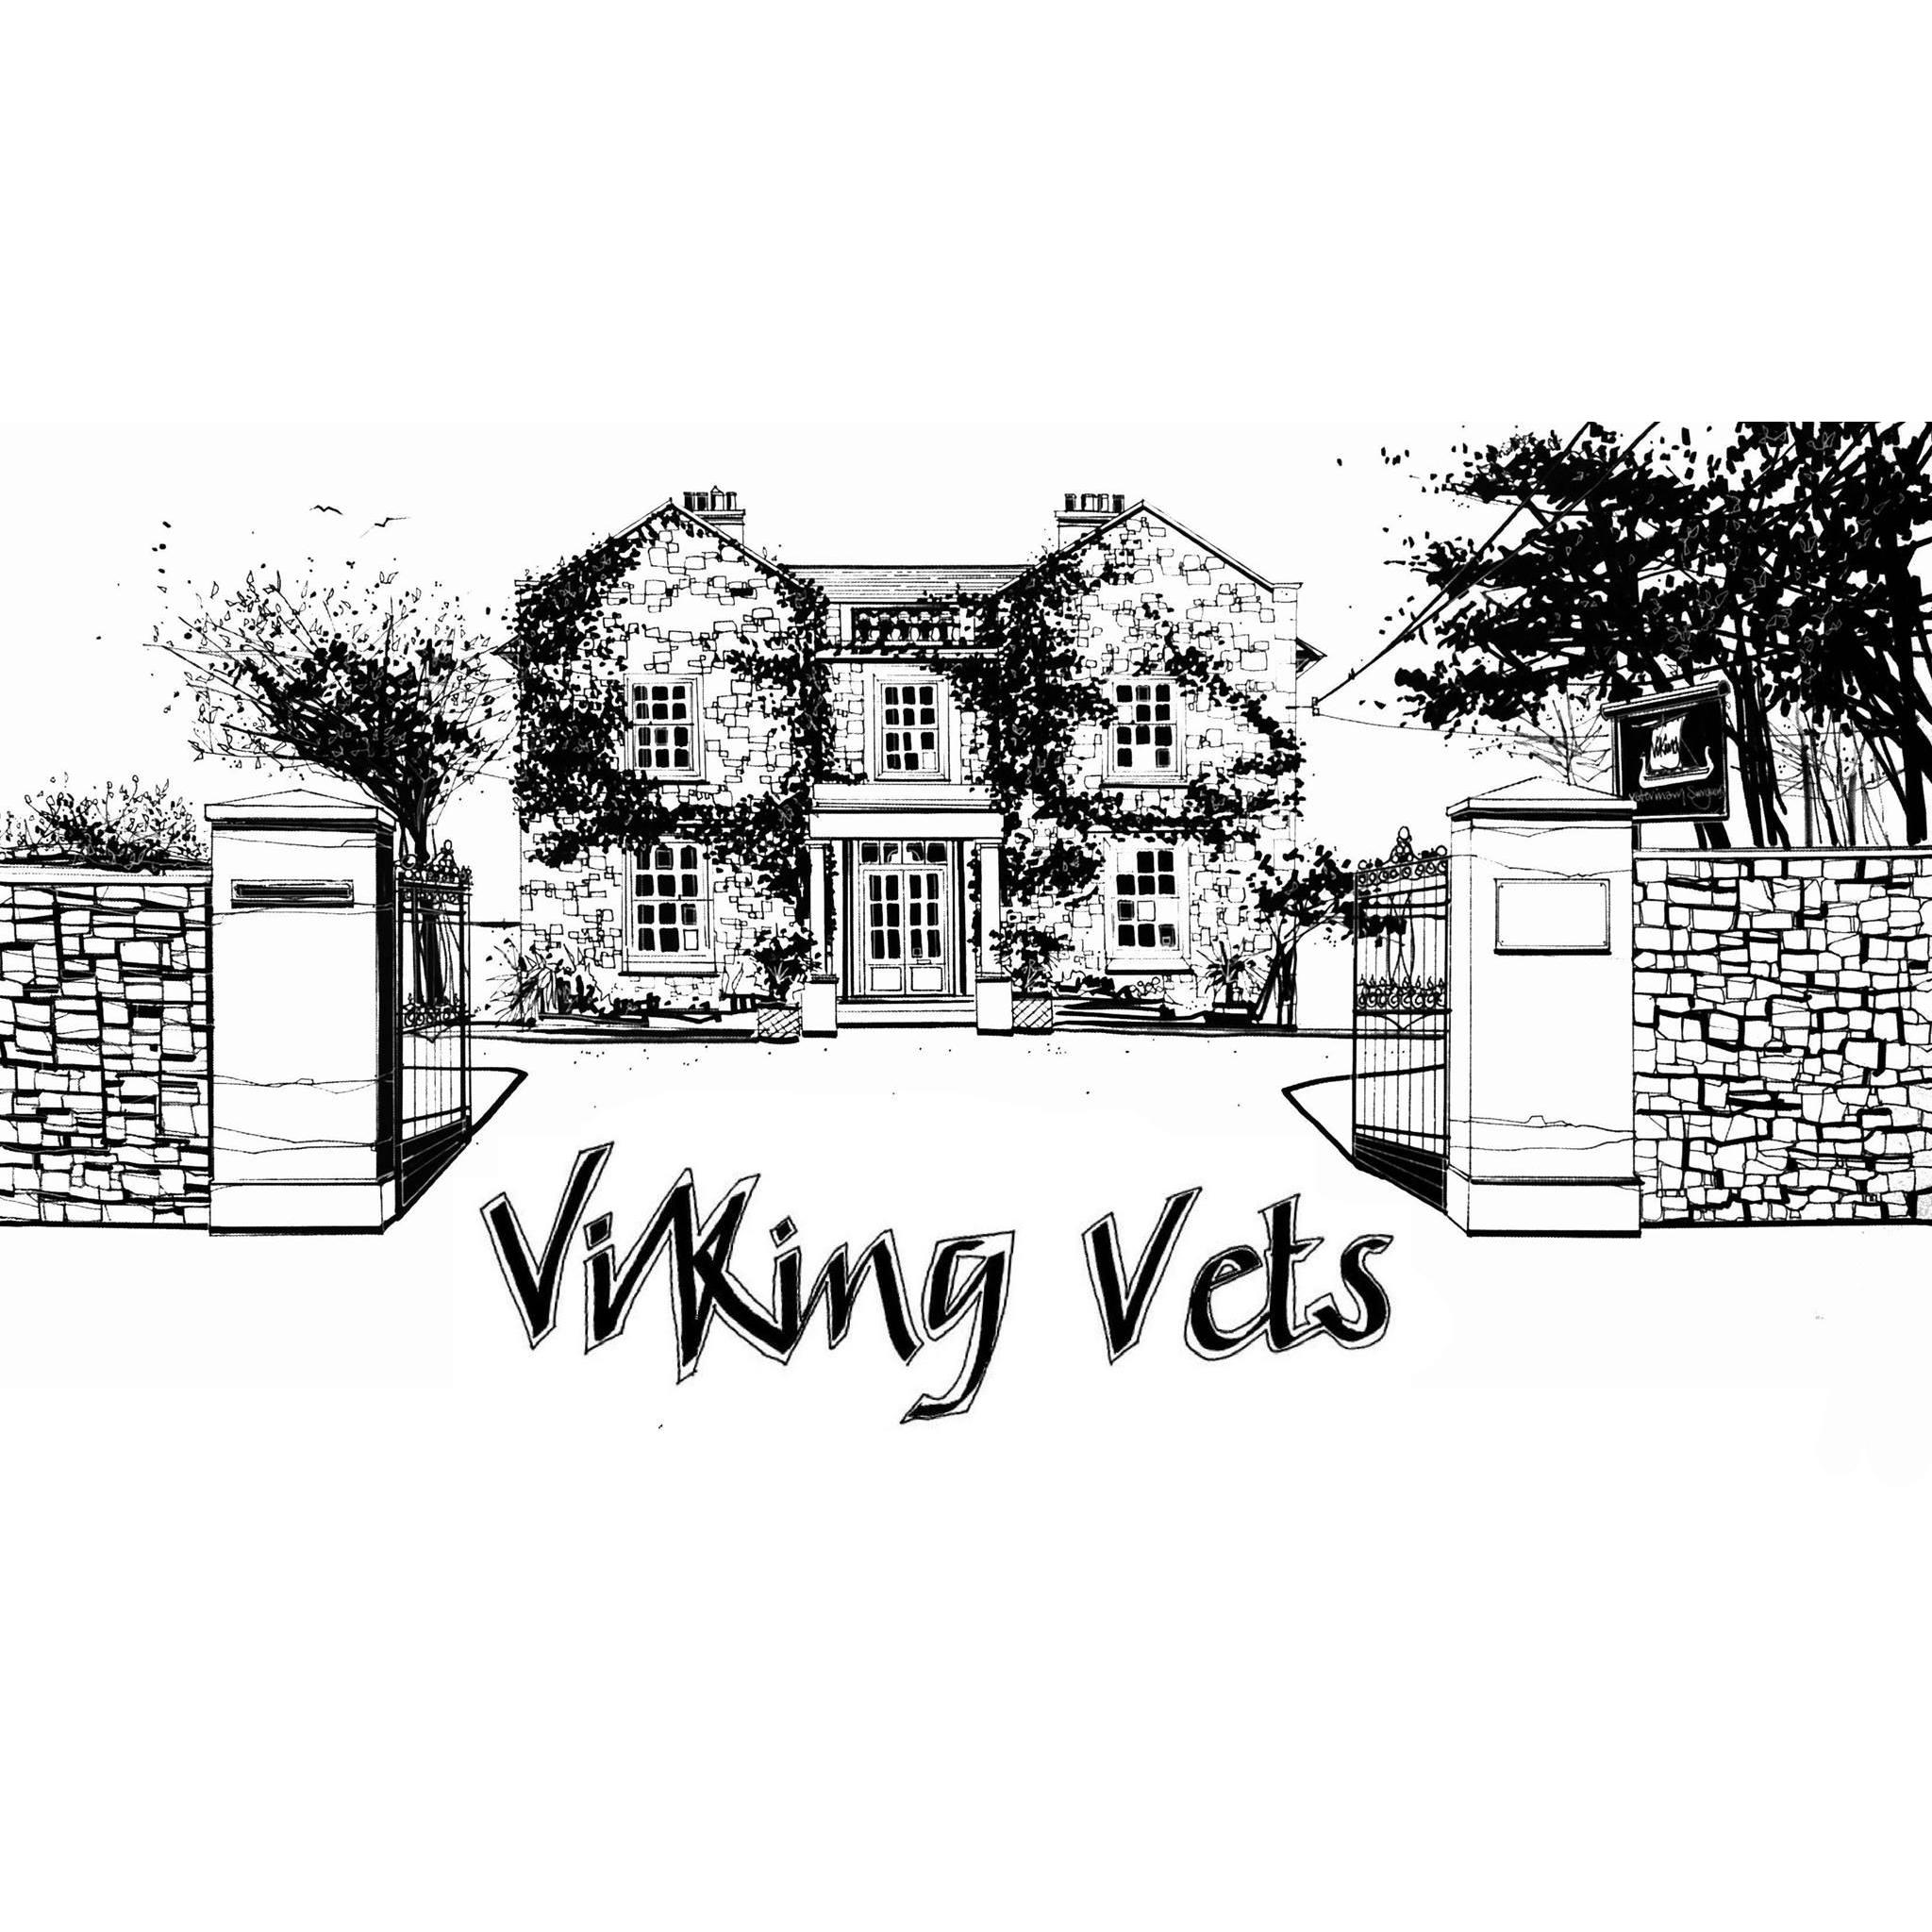 Viking Vets Logo